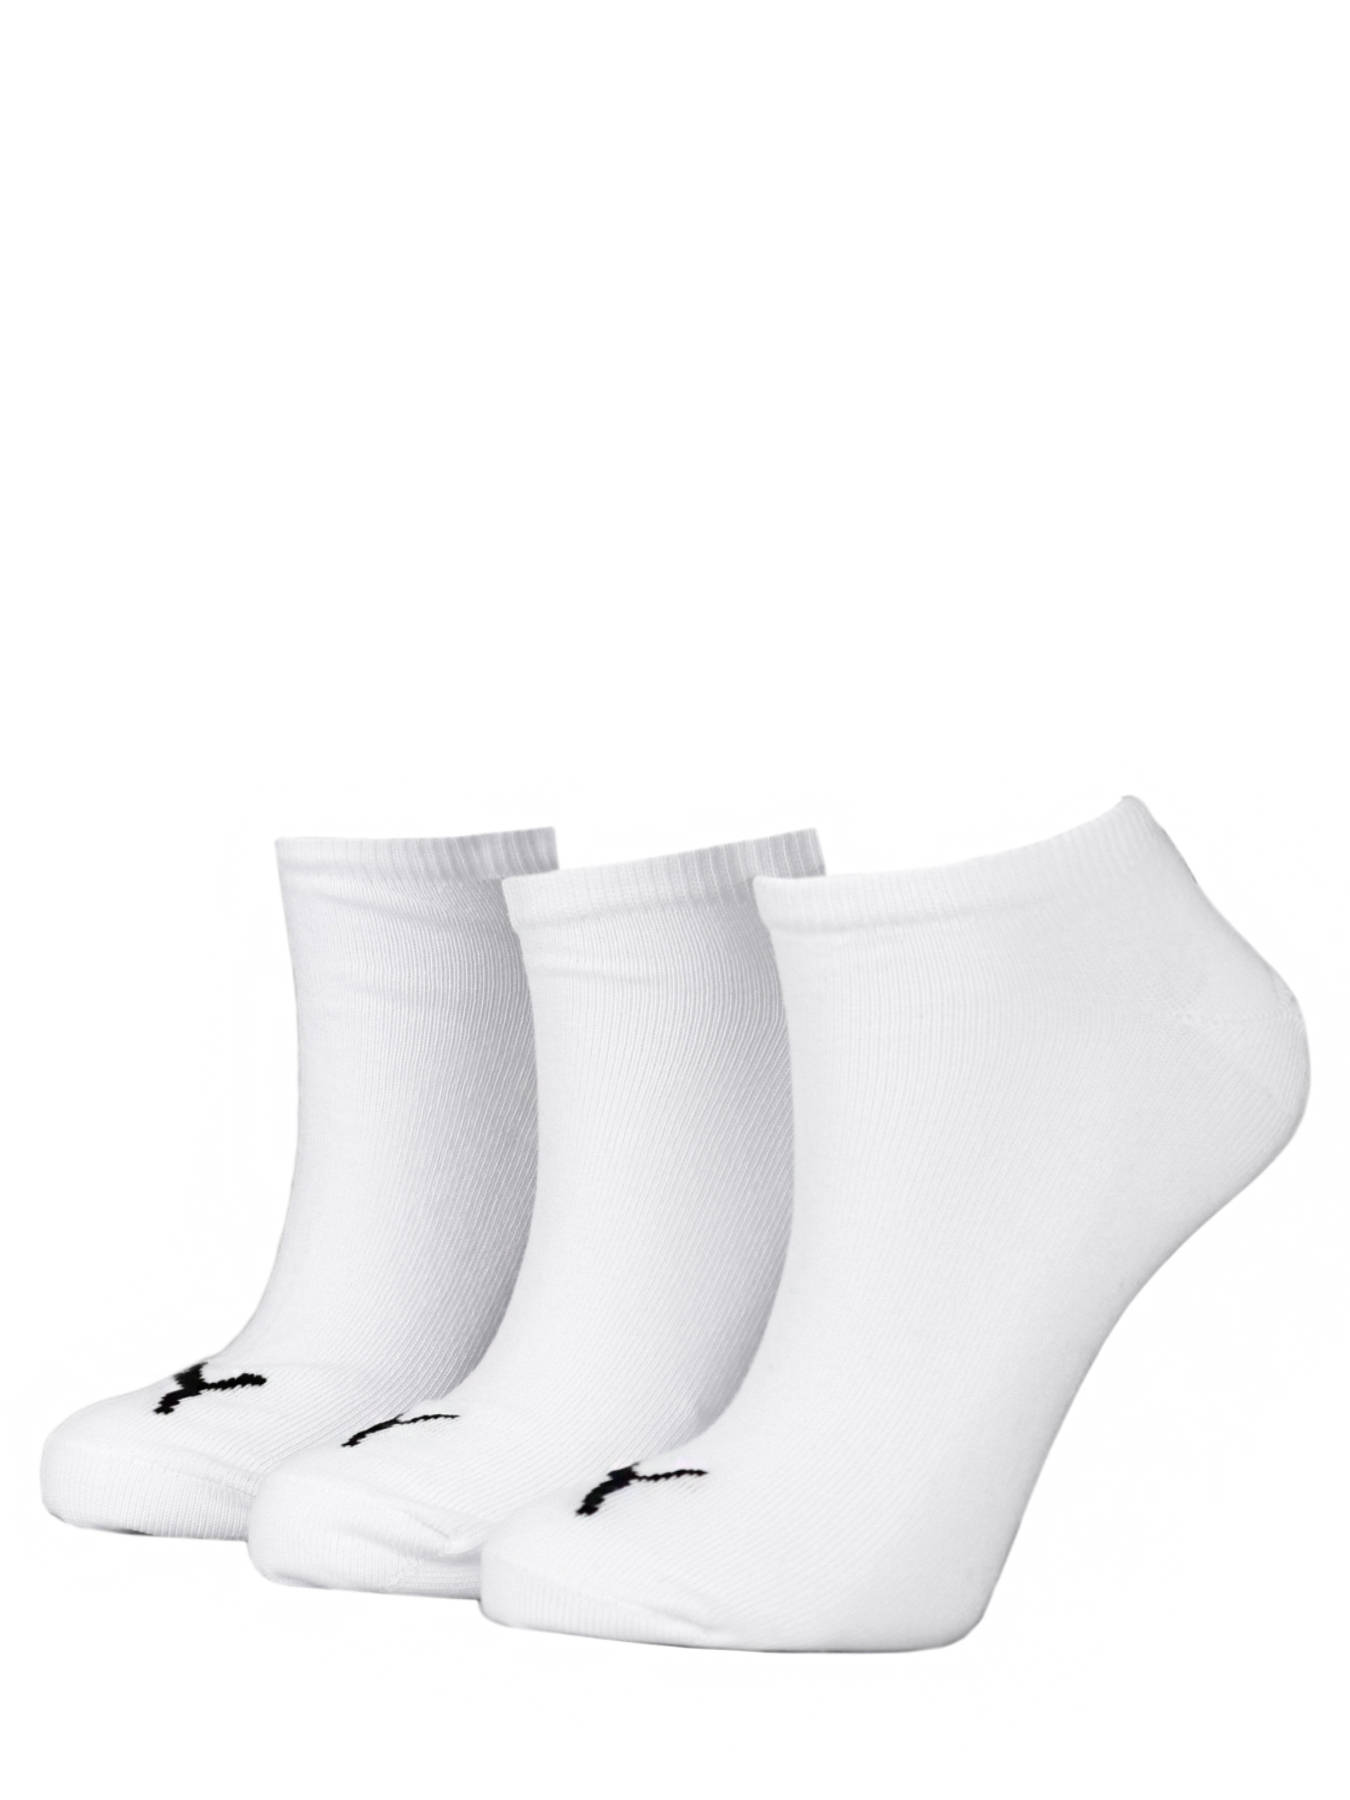 Puma Socks 261080001 - best prices